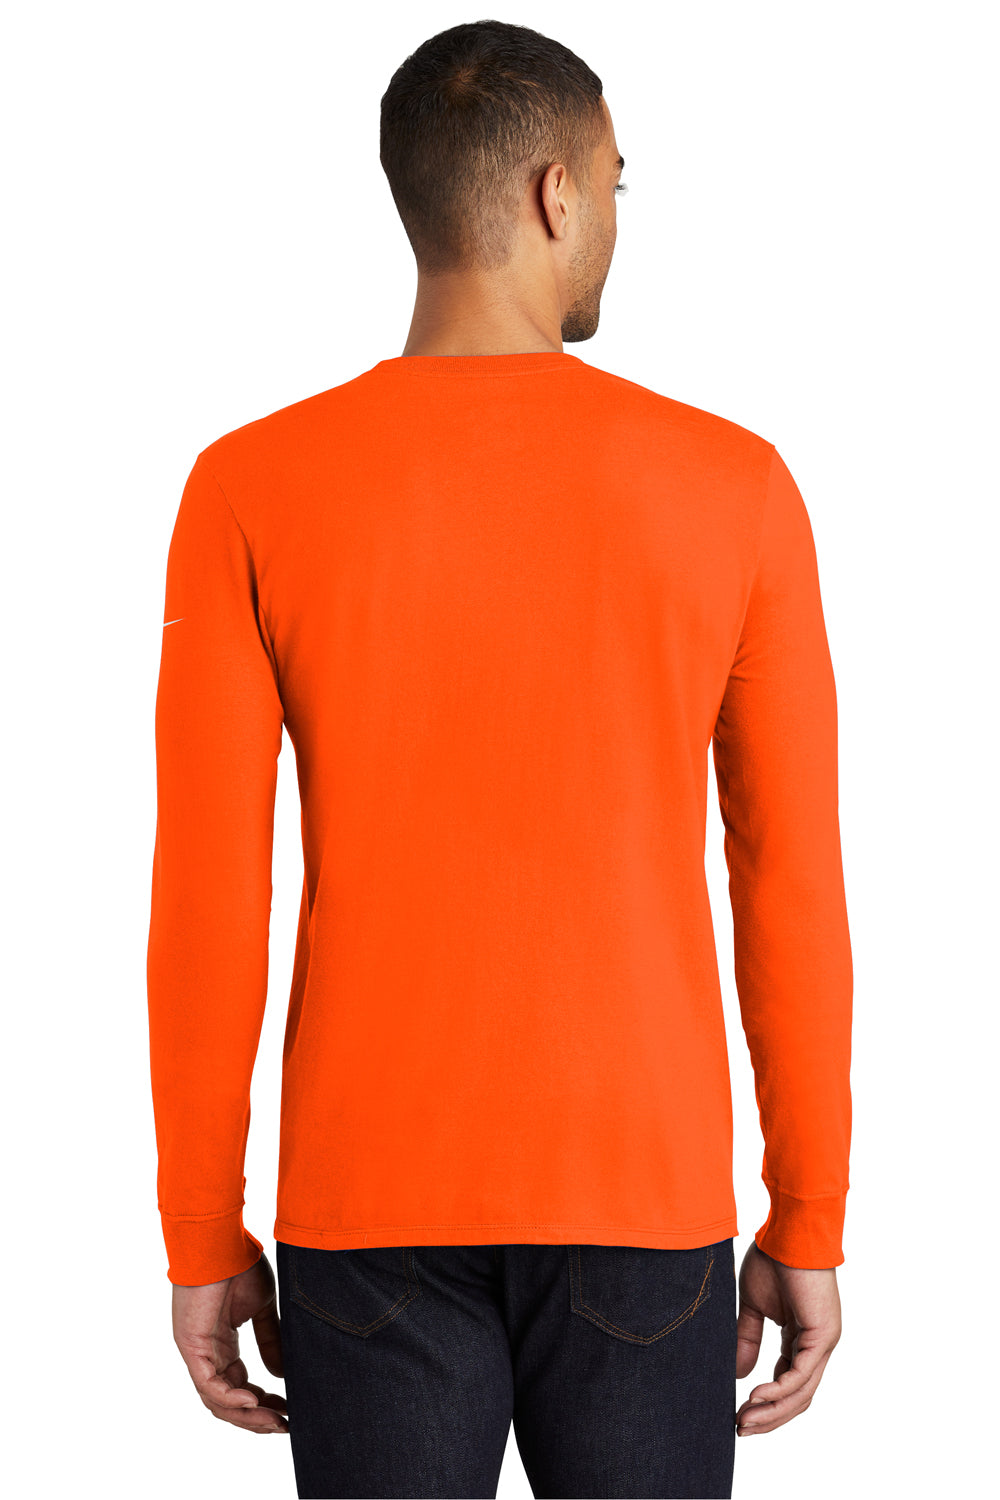 Nike NKBQ5232 Mens Core Long Sleeve Crewneck T-Shirt Orange Back